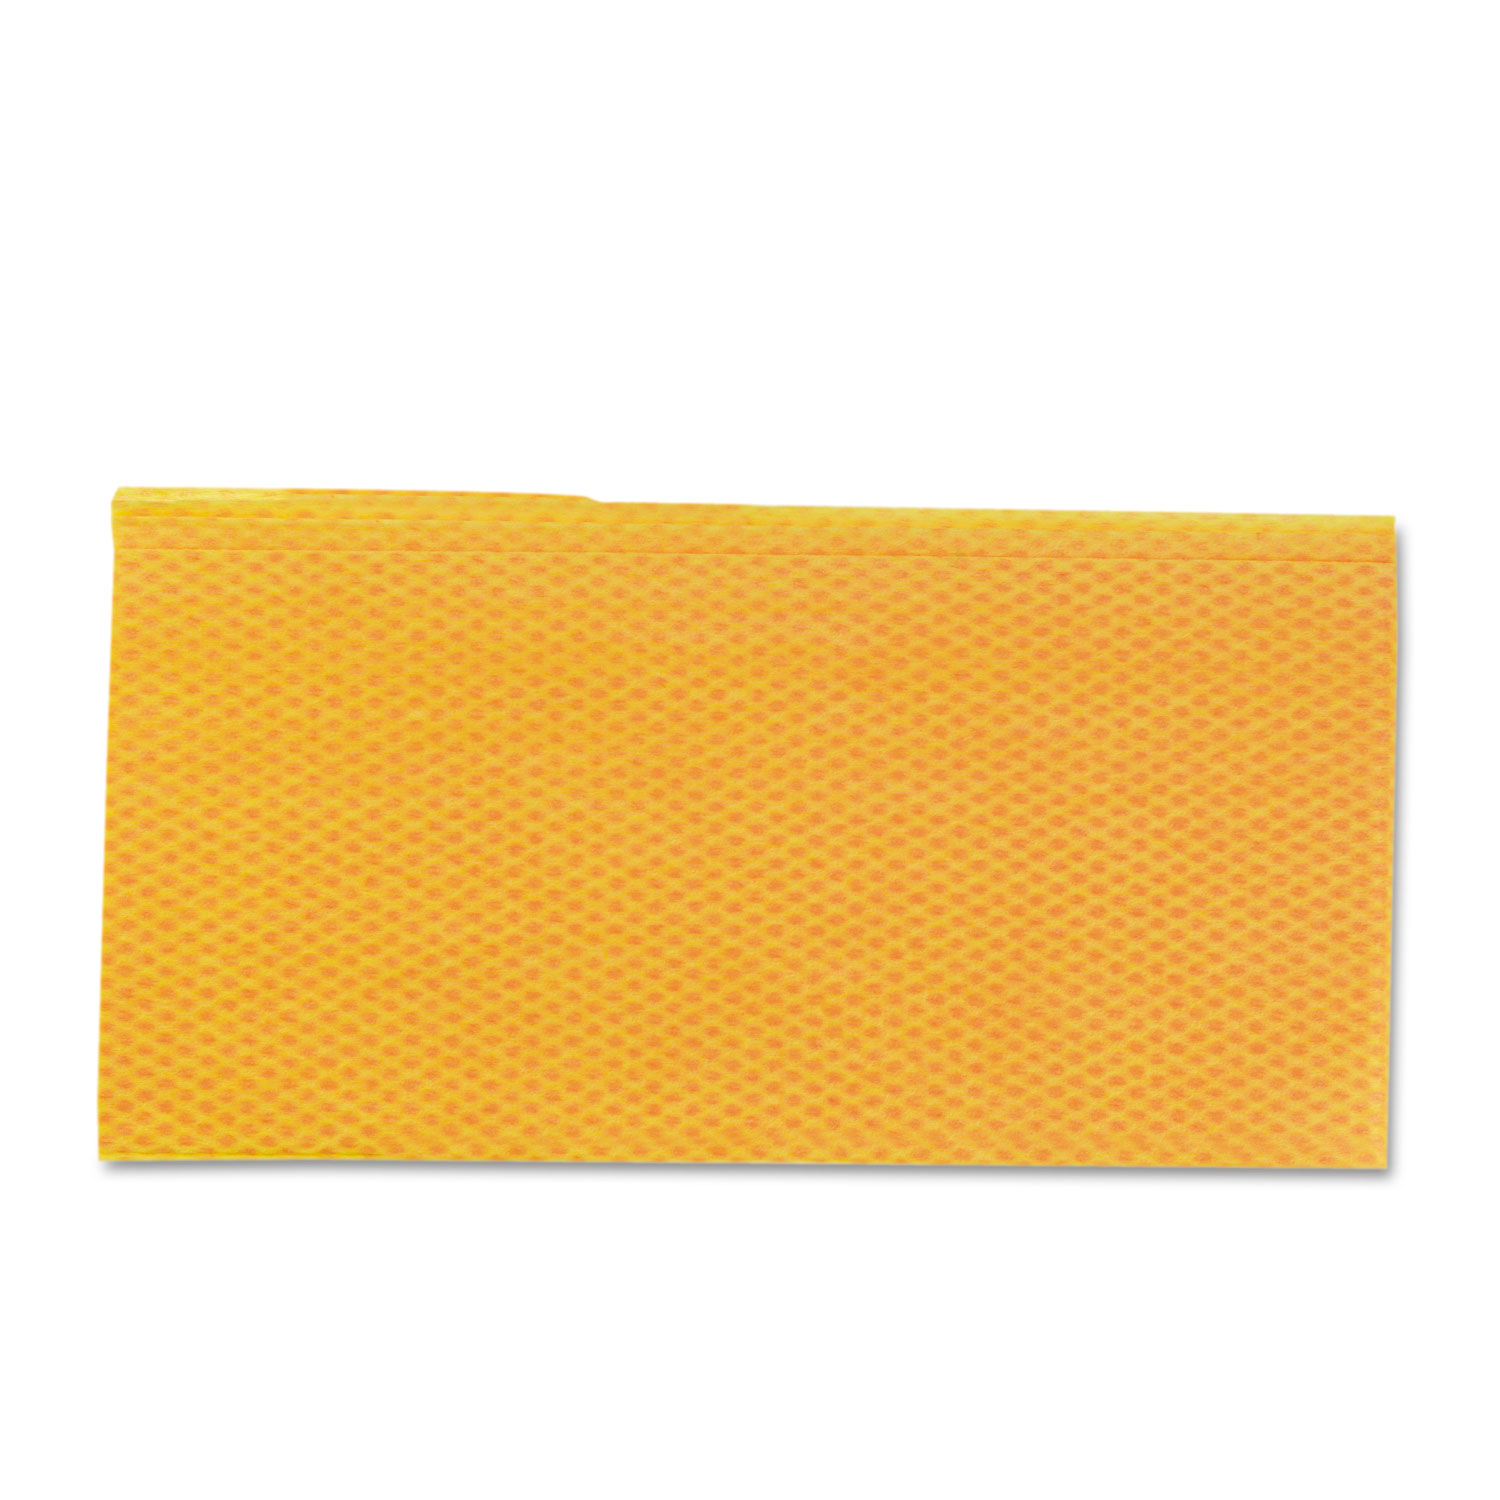 Stretch 'n Dust Cloths, 23 1/4 x 24, Orange/Yellow, 20/Bag, 5 Bags/Carton